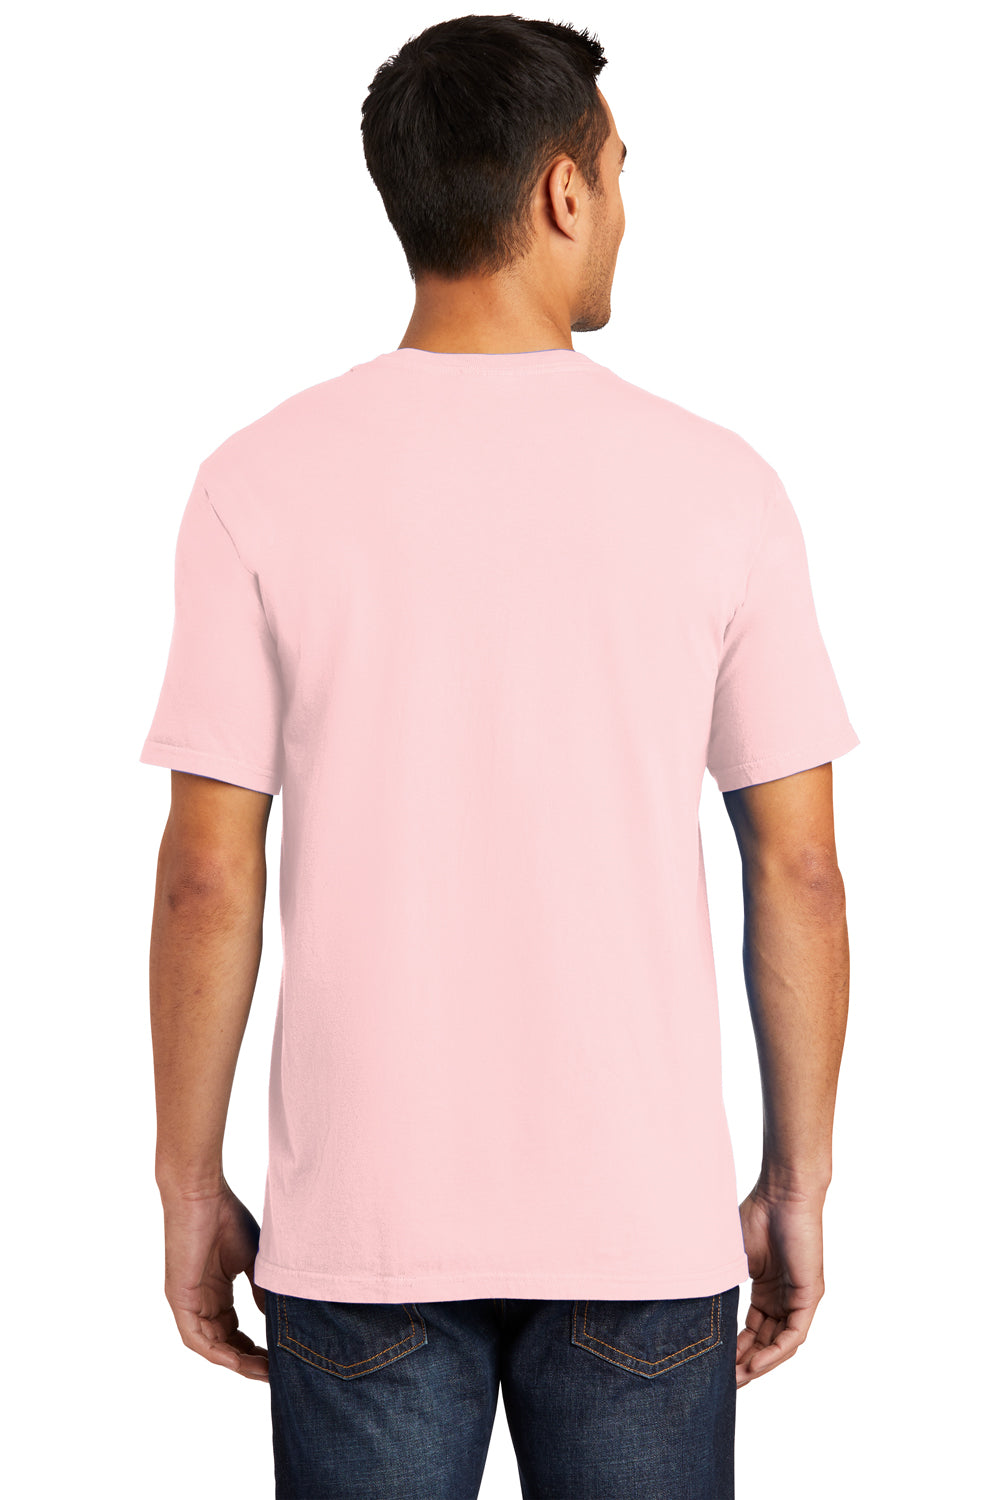 Port & Company PC099 Mens Beach Wash Short Sleeve Crewneck T-Shirt Cherry Blossom Pink Back